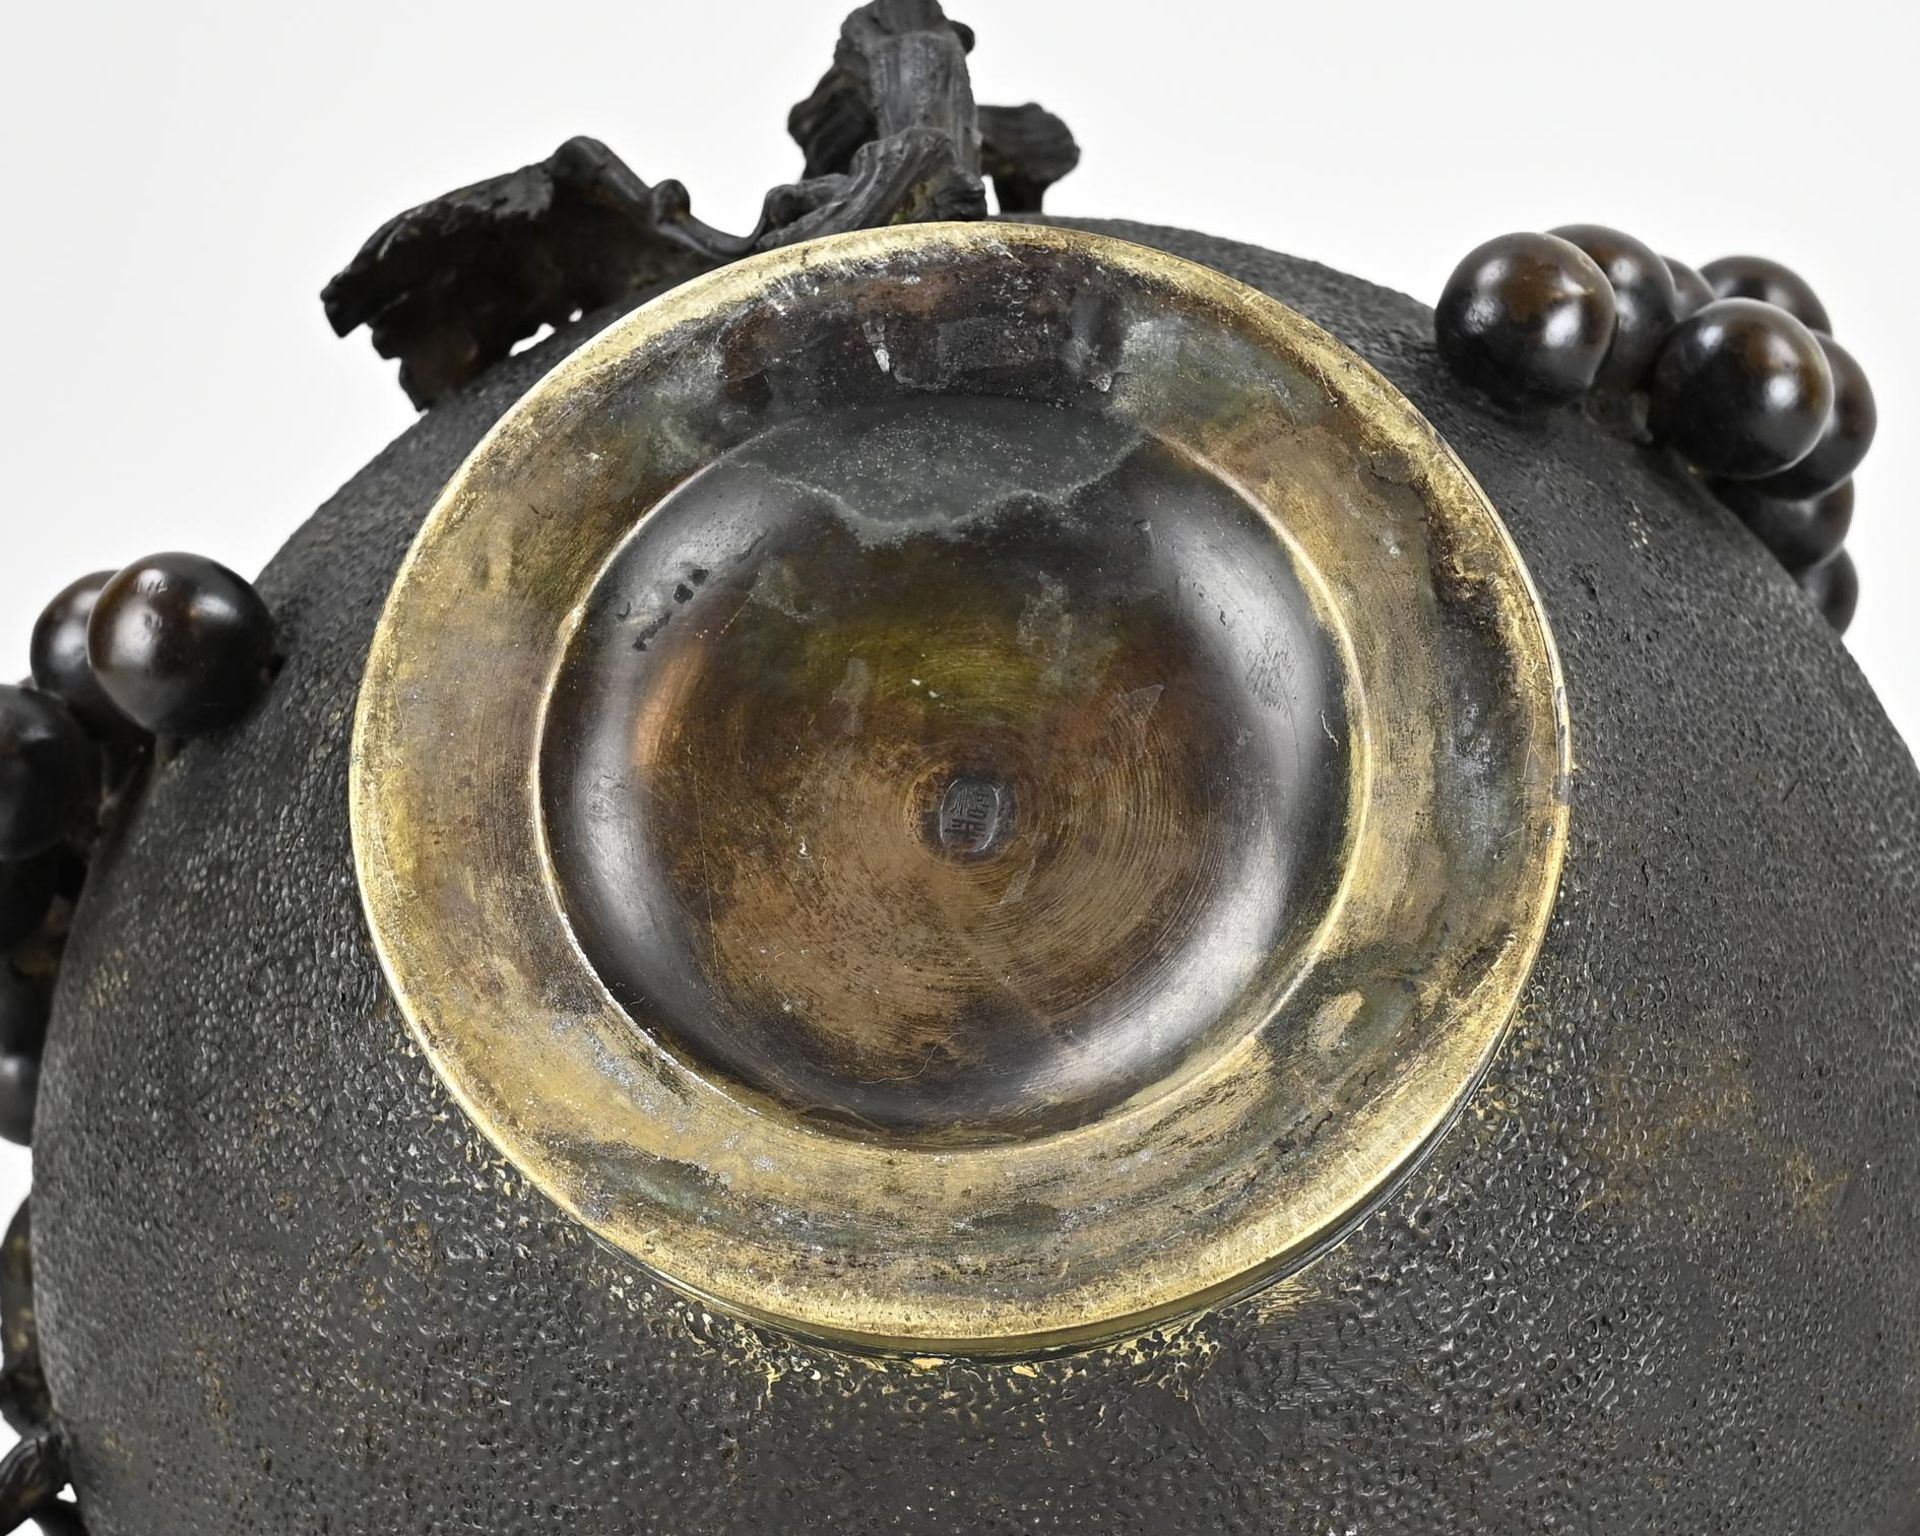 Japanese bronze vase, H 25 x Ø 27 cm. - Image 3 of 3